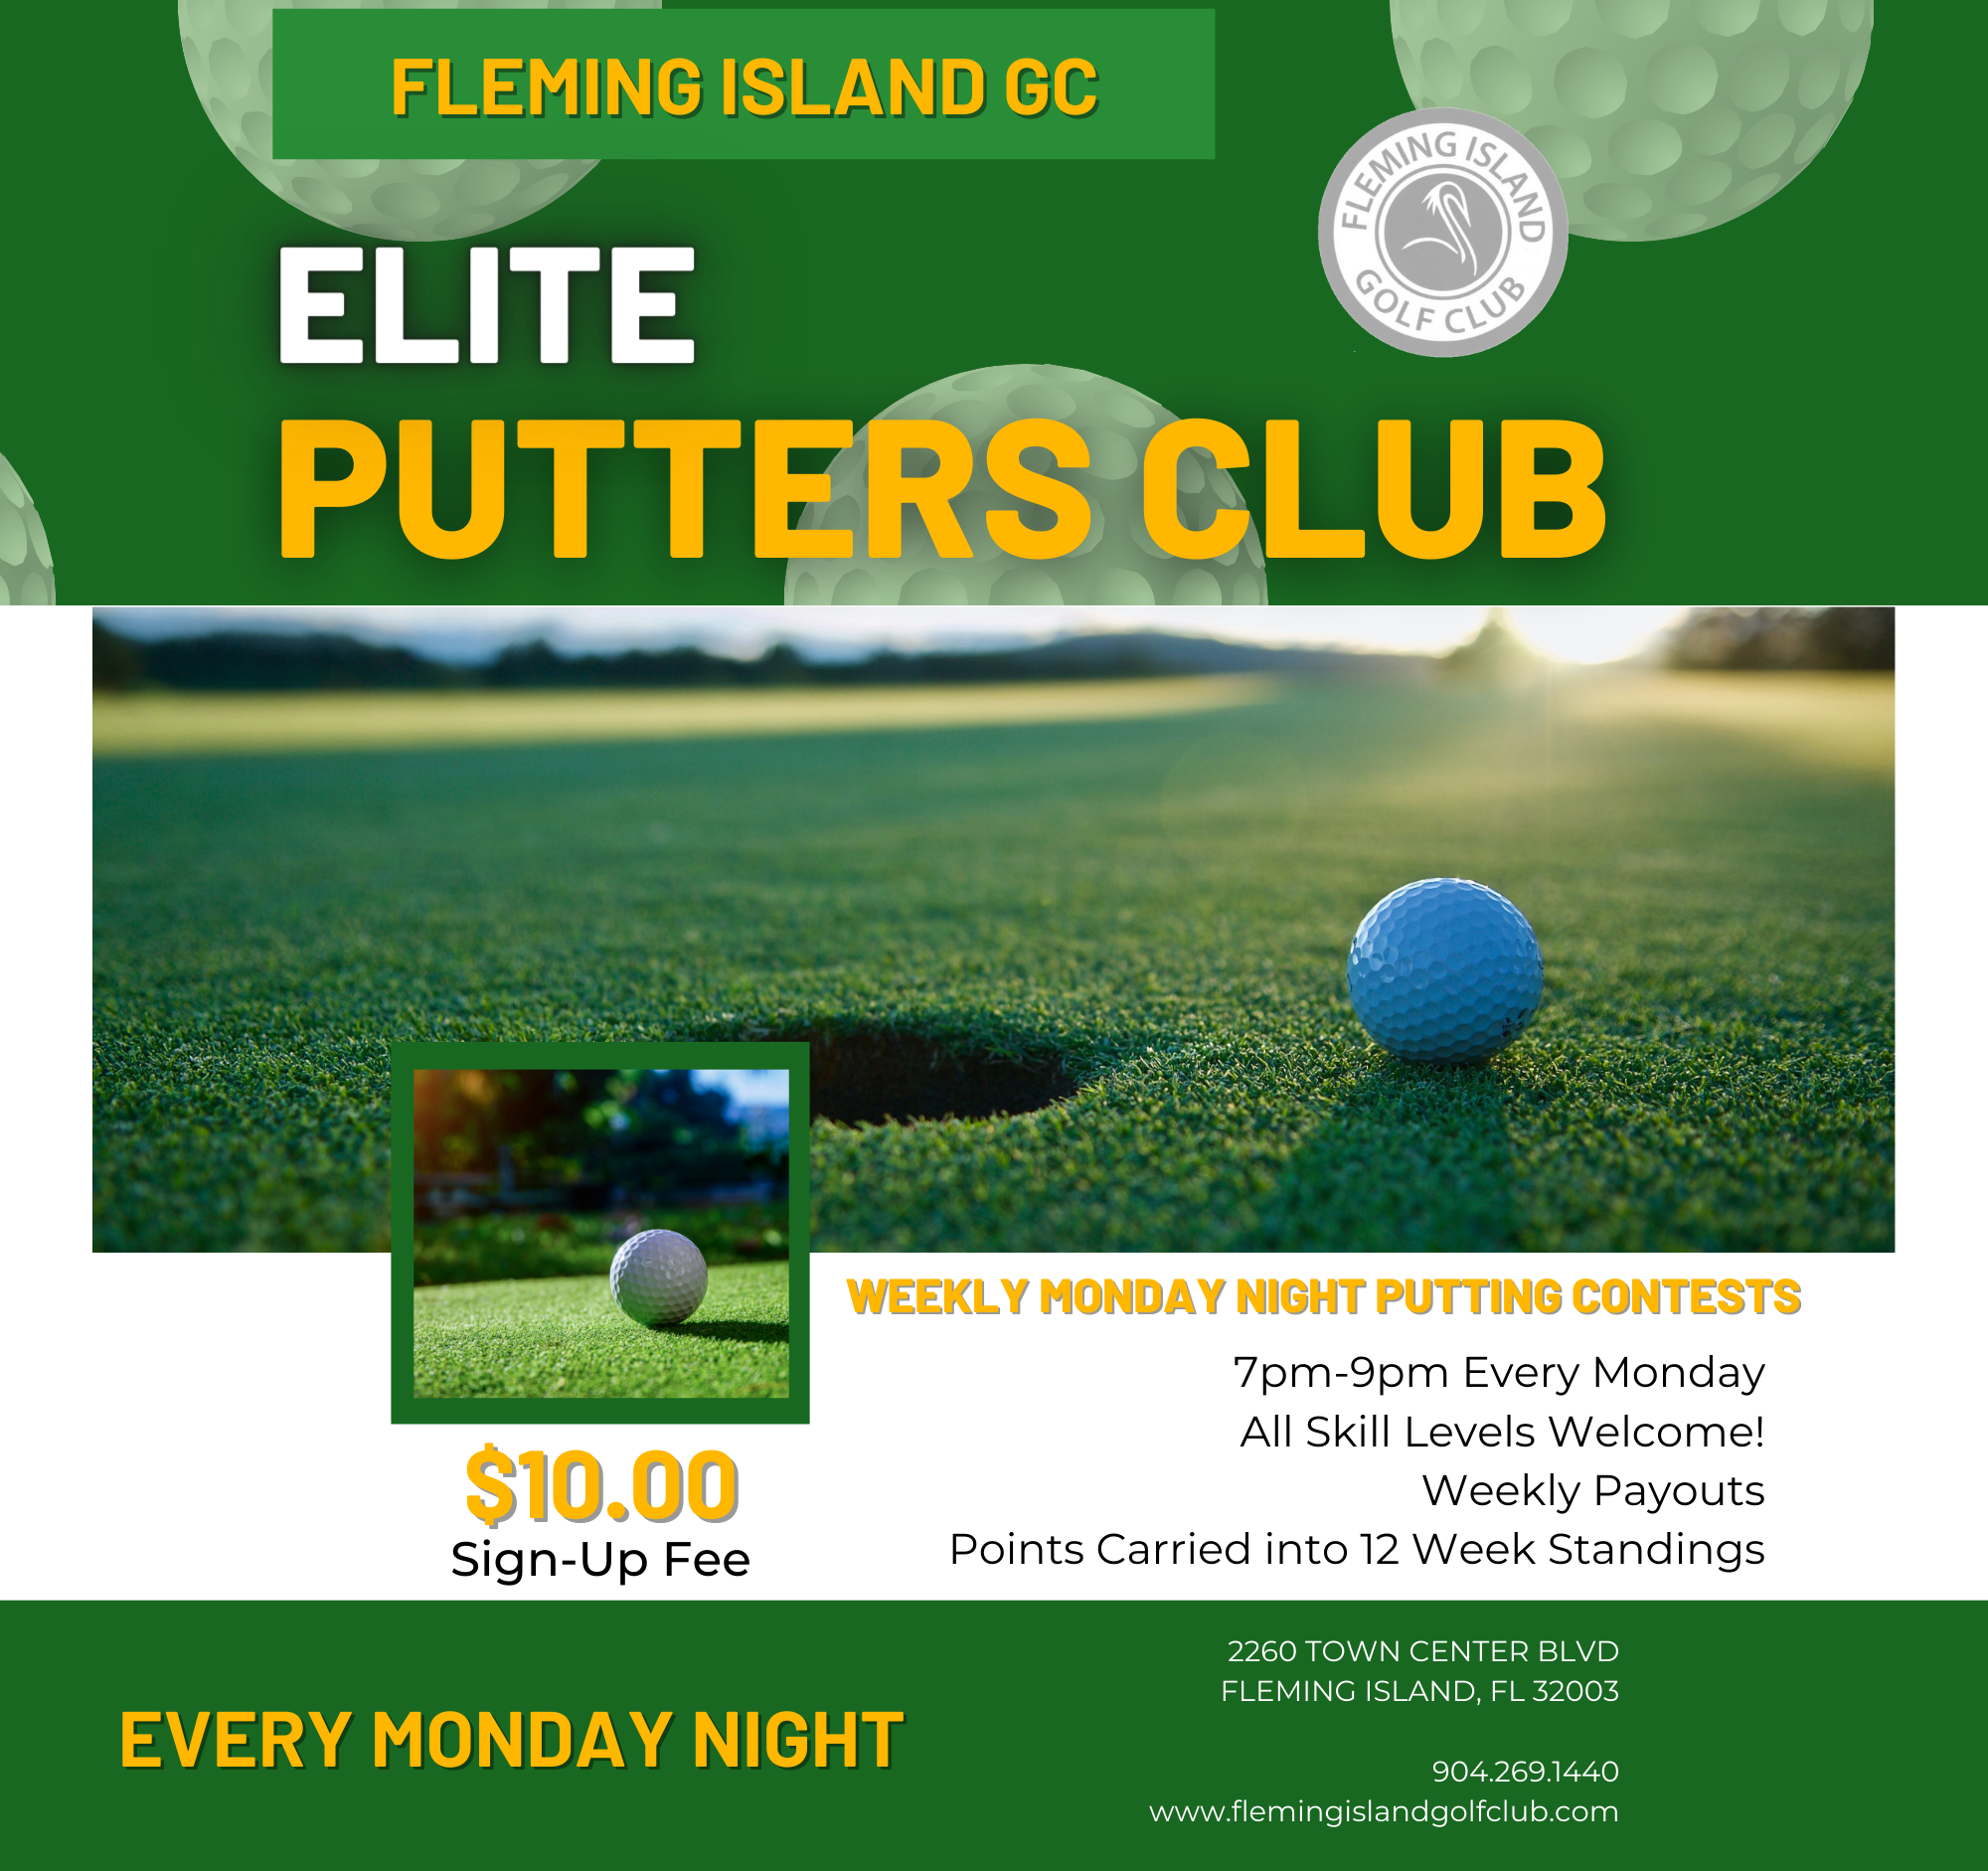 Fleming Island Elite Putters Club newsletter 1